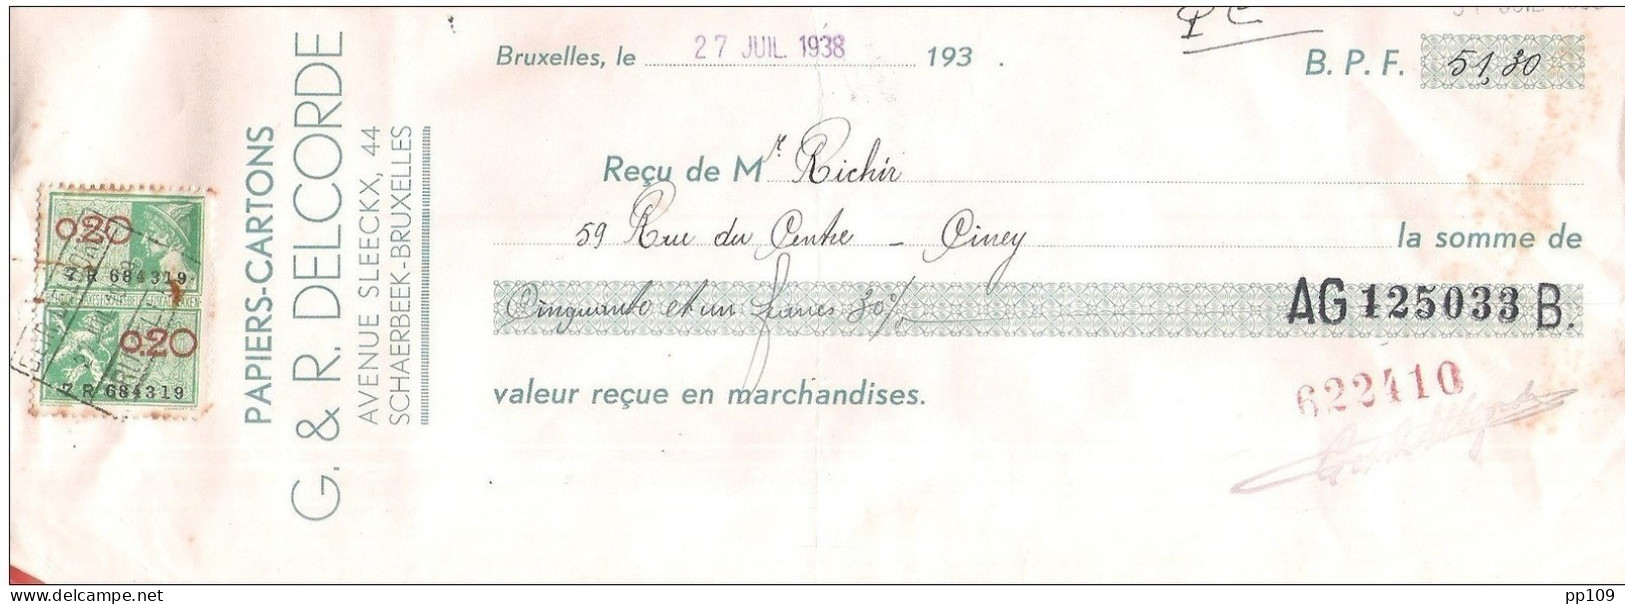 Mandat Pub  Papier Carton DELCORDE   44, Avenue Sleeckx à SCHAERBEEK Bruxelles 1938  +  Timbre Fiscal - Dokumente